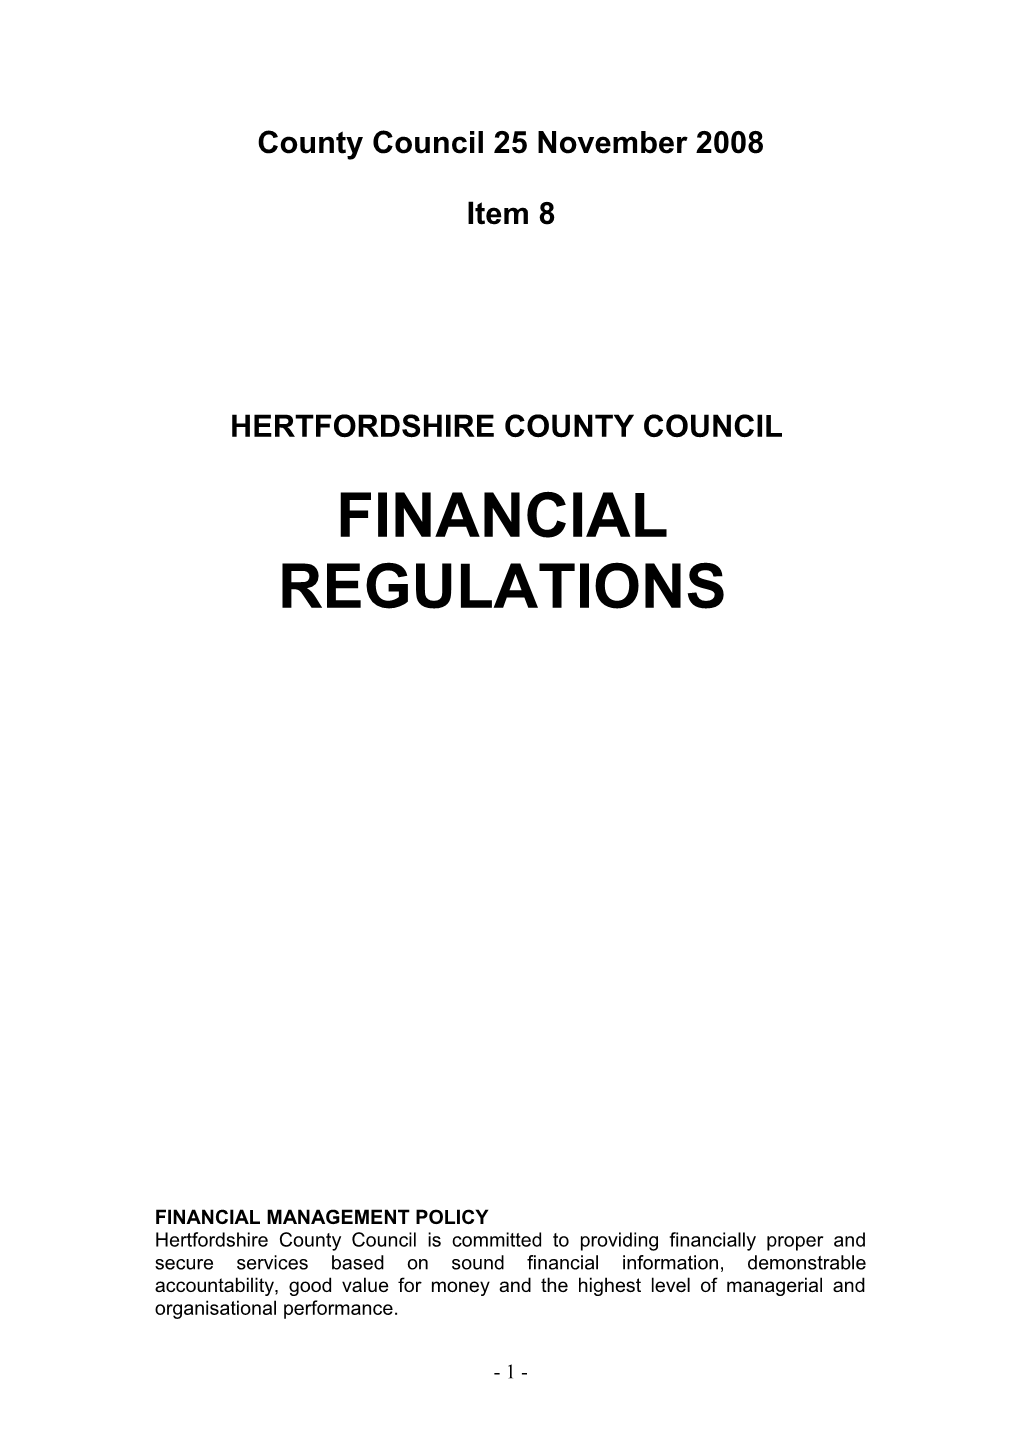 Hertfordshire County Council Financial Regulations - 25 November 2008